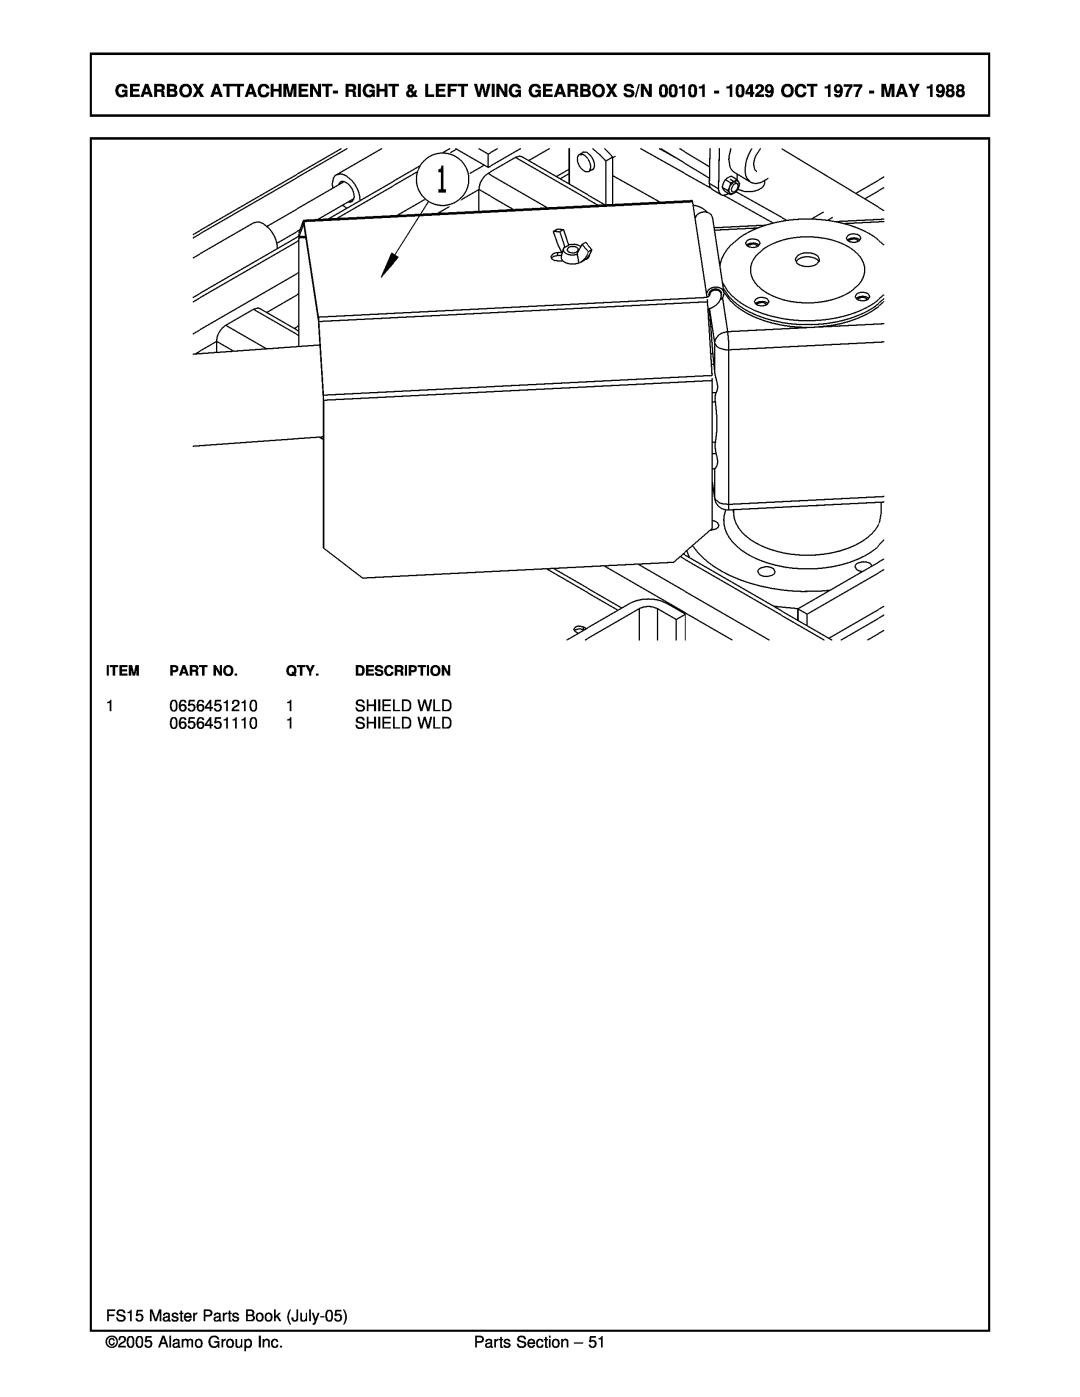 Servis-Rhino FS15 manual 0656451210 